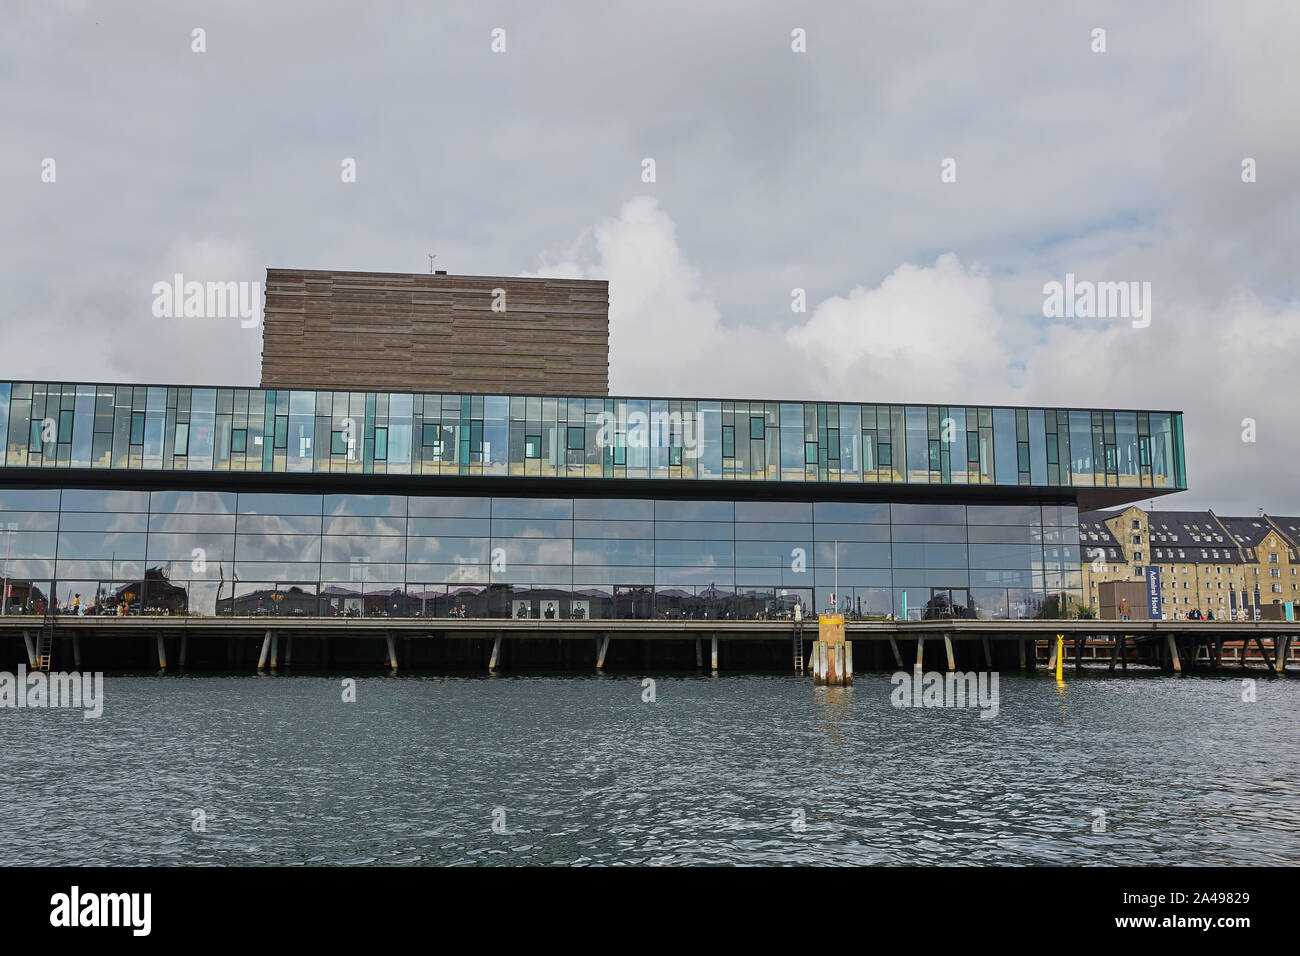 Kopenhagen, Dänemark - 25. MAI 2017: Modernes Gebäude der Neuen Royal Playhouse Theater in der Altstadt mit Blick auf berühmte Kopenhagen Waterfront, Ny Stockfoto